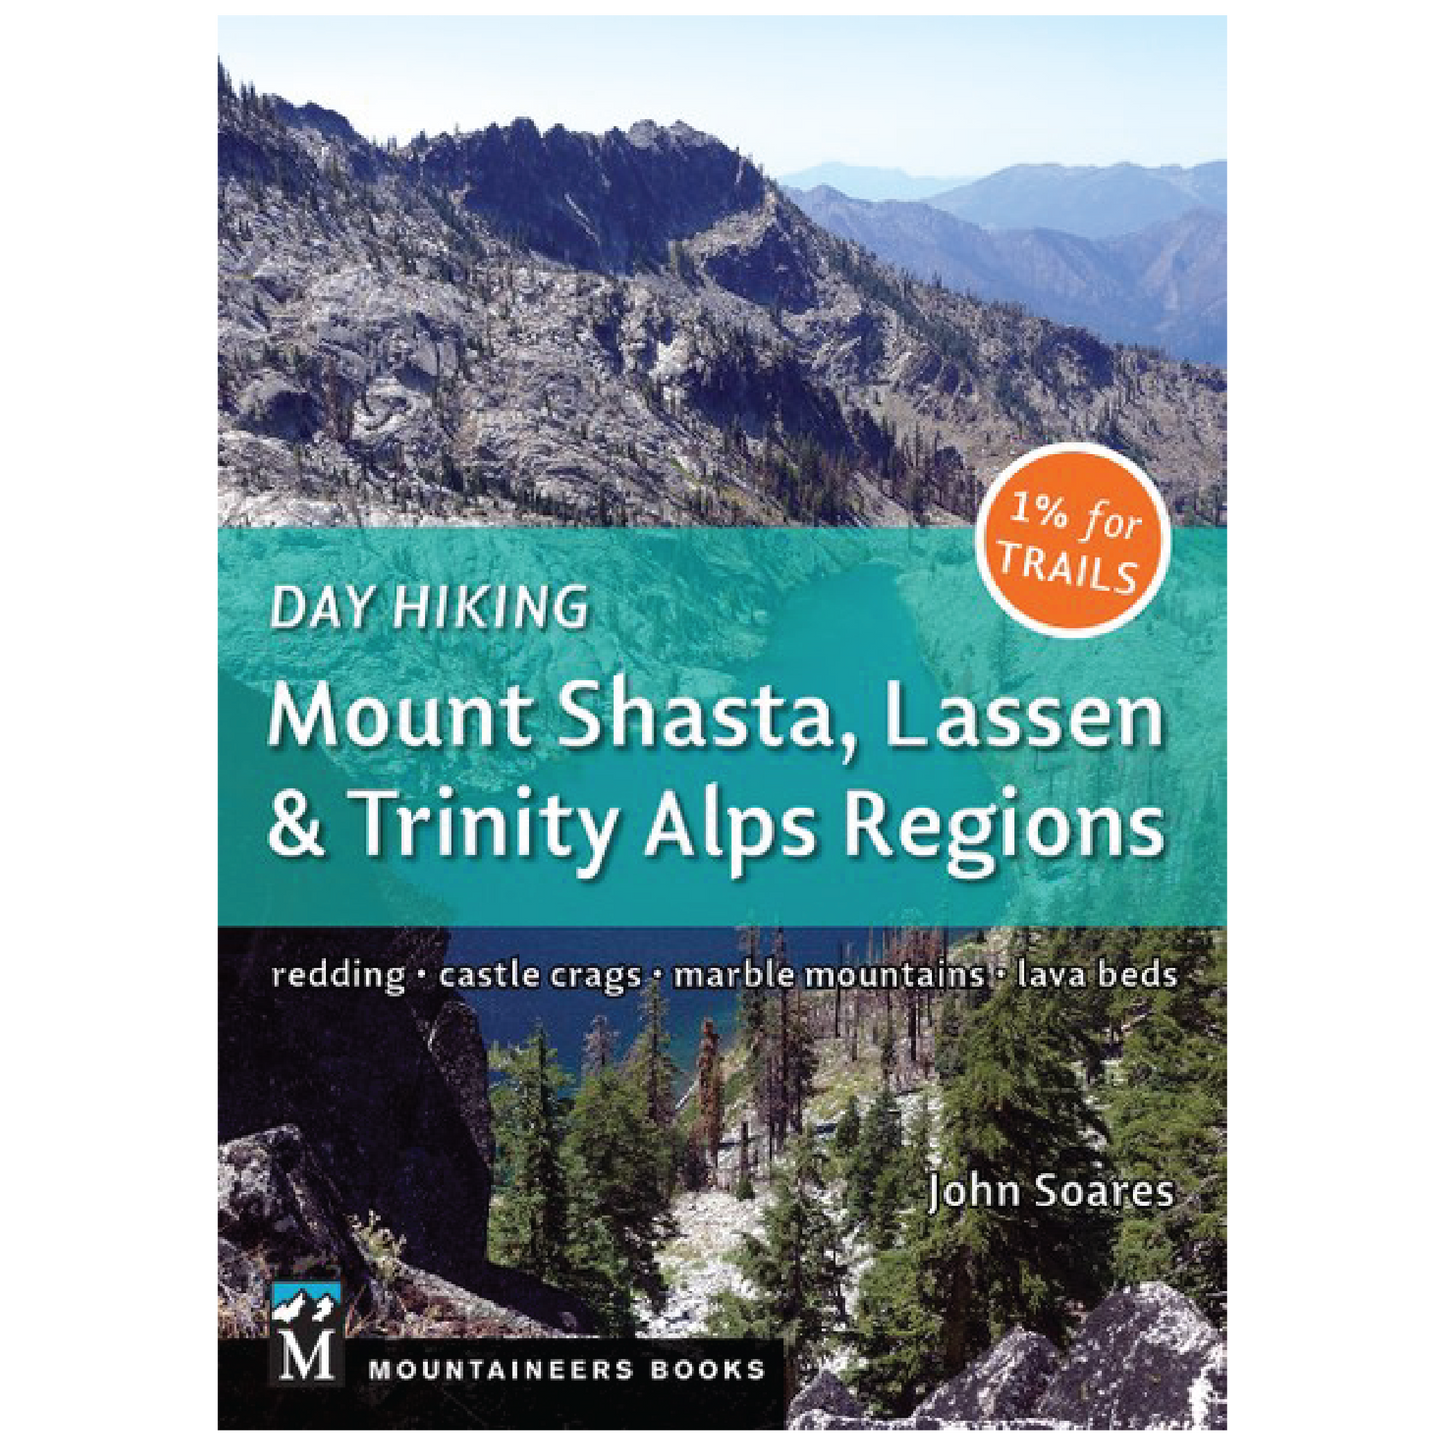 Day Hiking: Mount Shasta, Lassen & Trinity Alps Regions